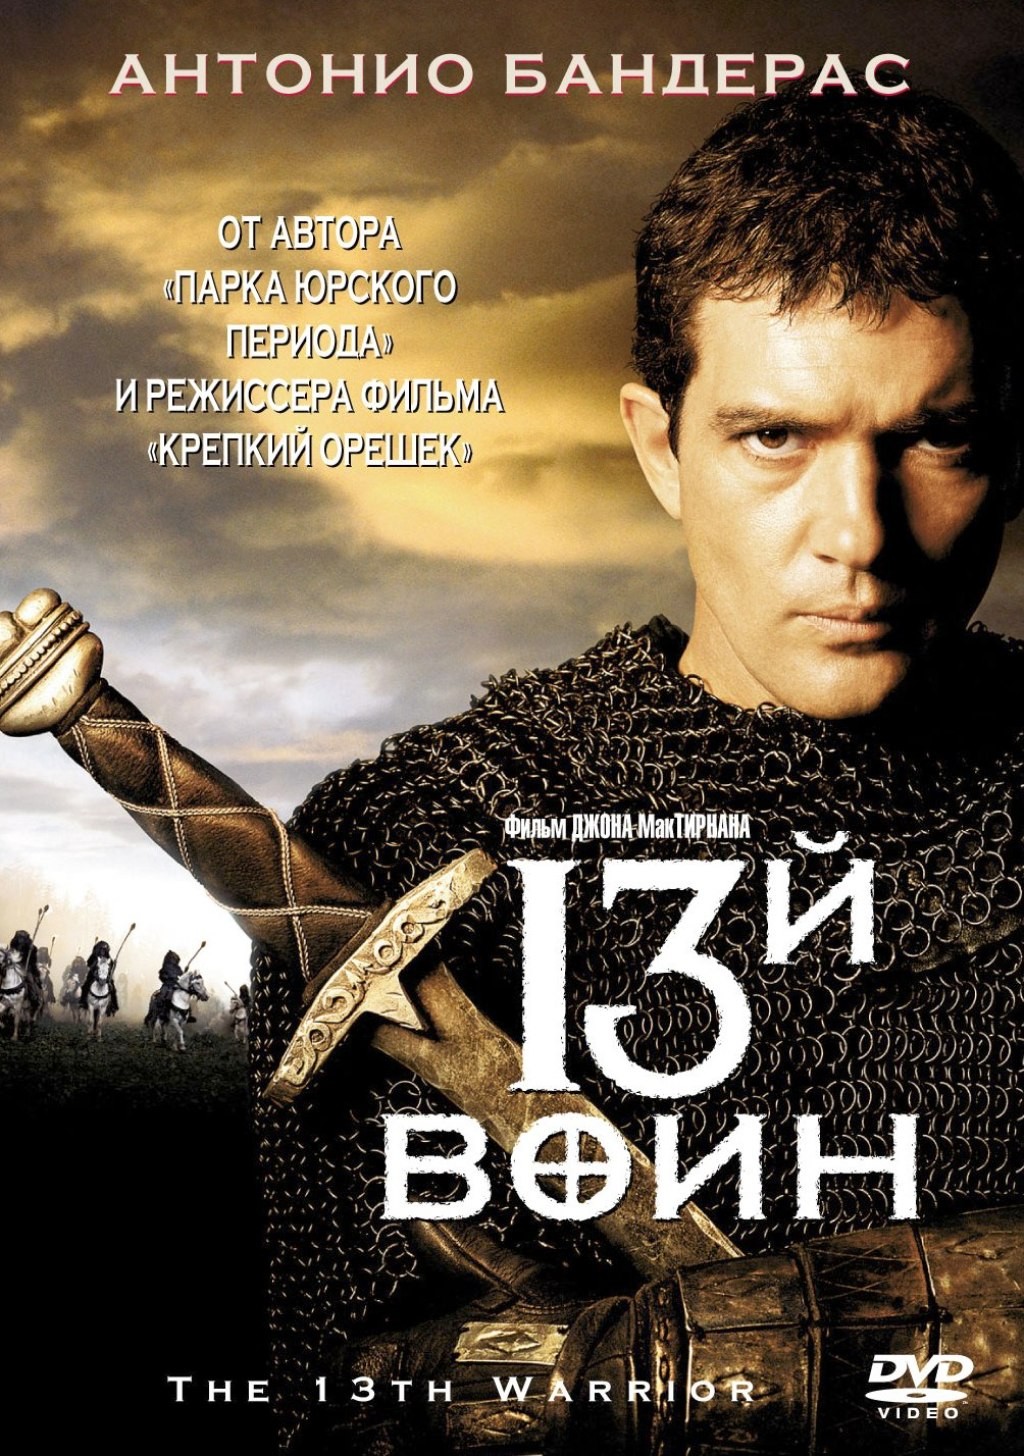 13-й воин (DVD)